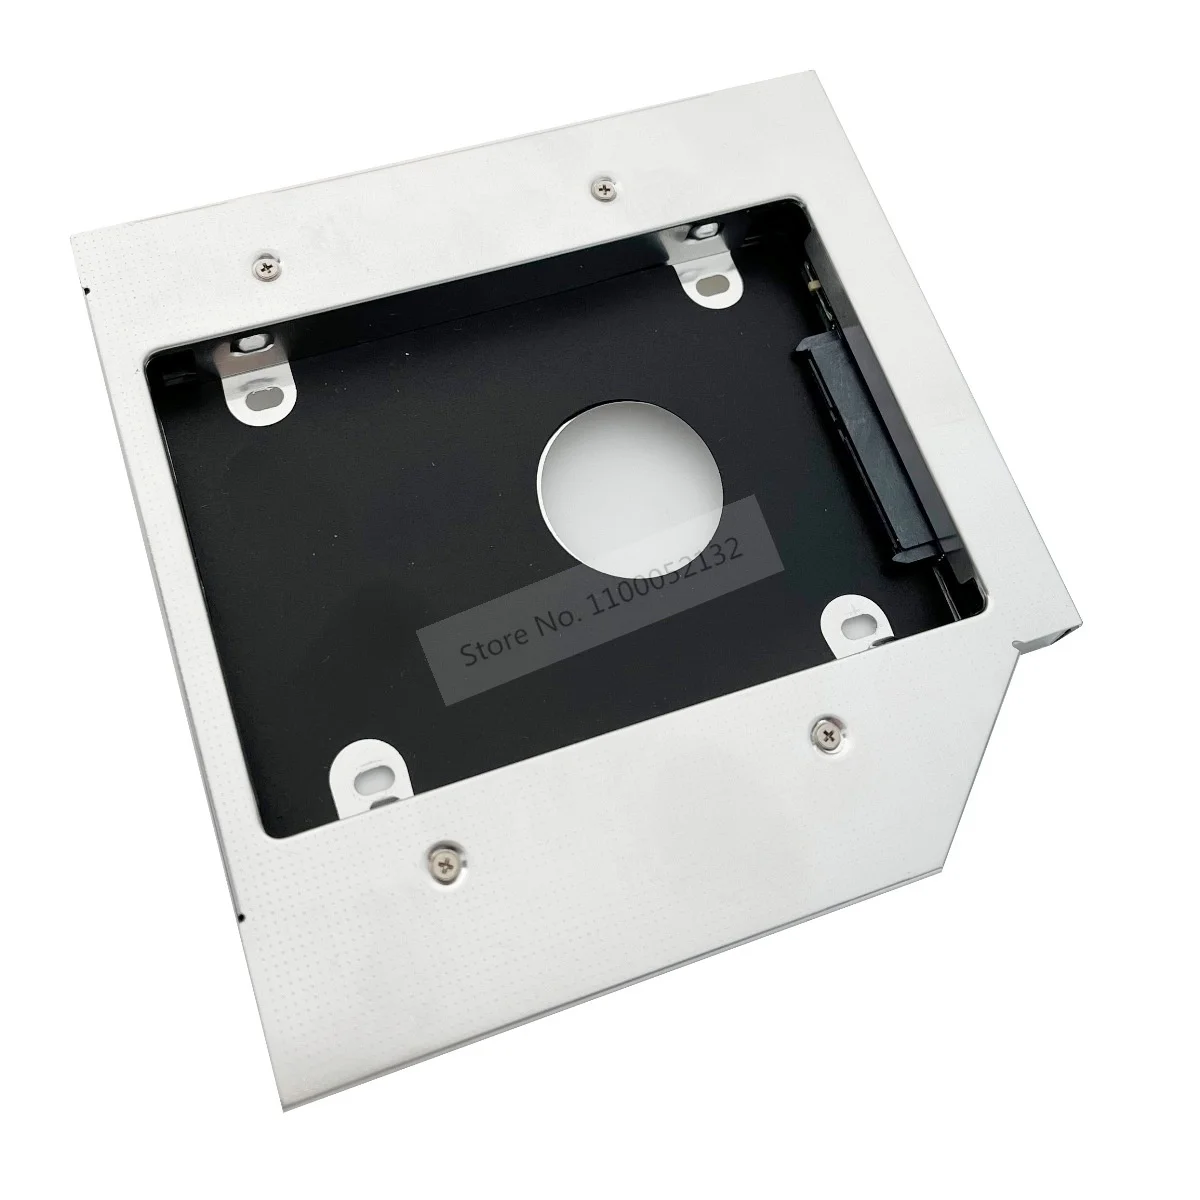 

Aluminum 2nd Hard Drive HDD SSD Case Enclosure Optical Frame Caddy SATA 3.0 for Asus K55A G55V M50VM GT51N UJ8C0 GSA-T50N DVD